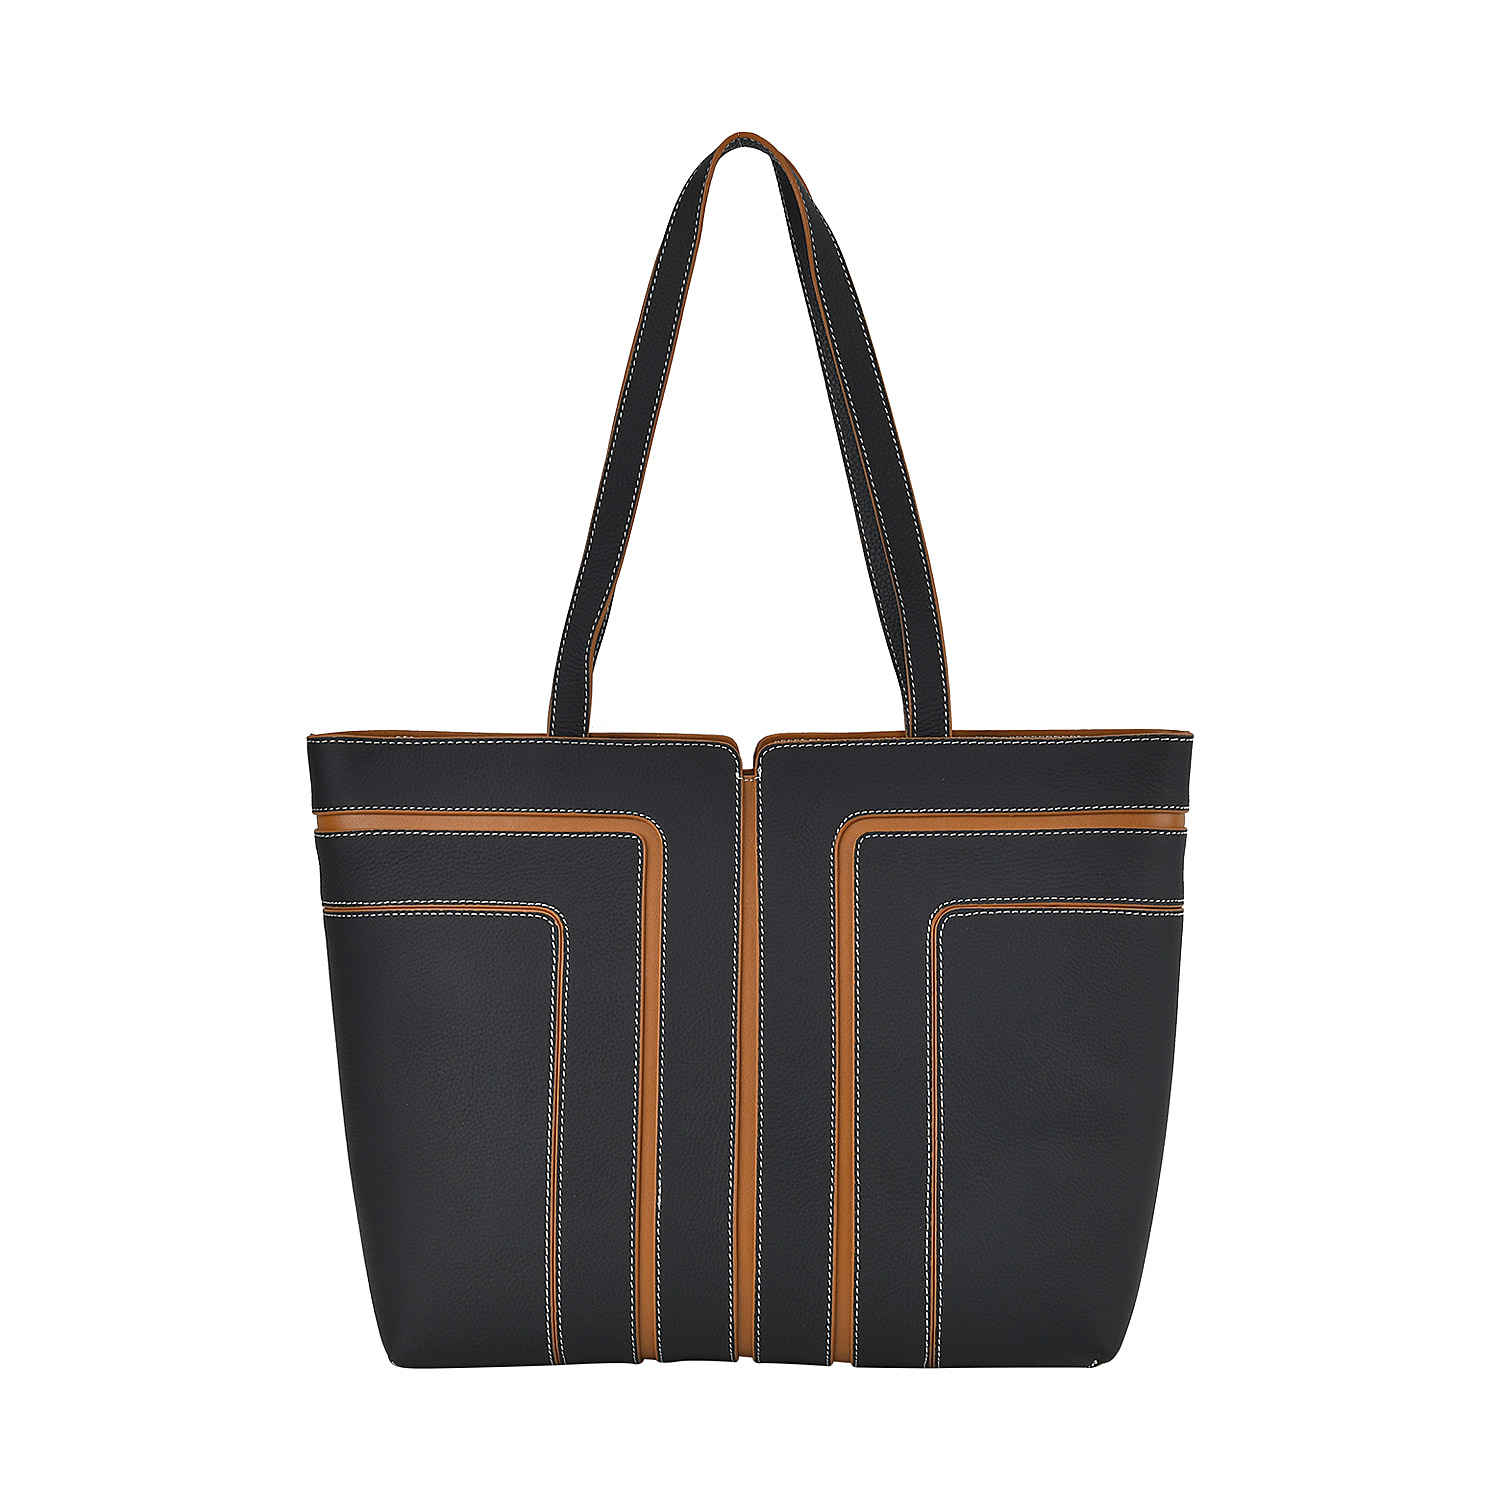 Leather-Patterned-Tote-Bag-Size-32x12x28-cm-Black-Black